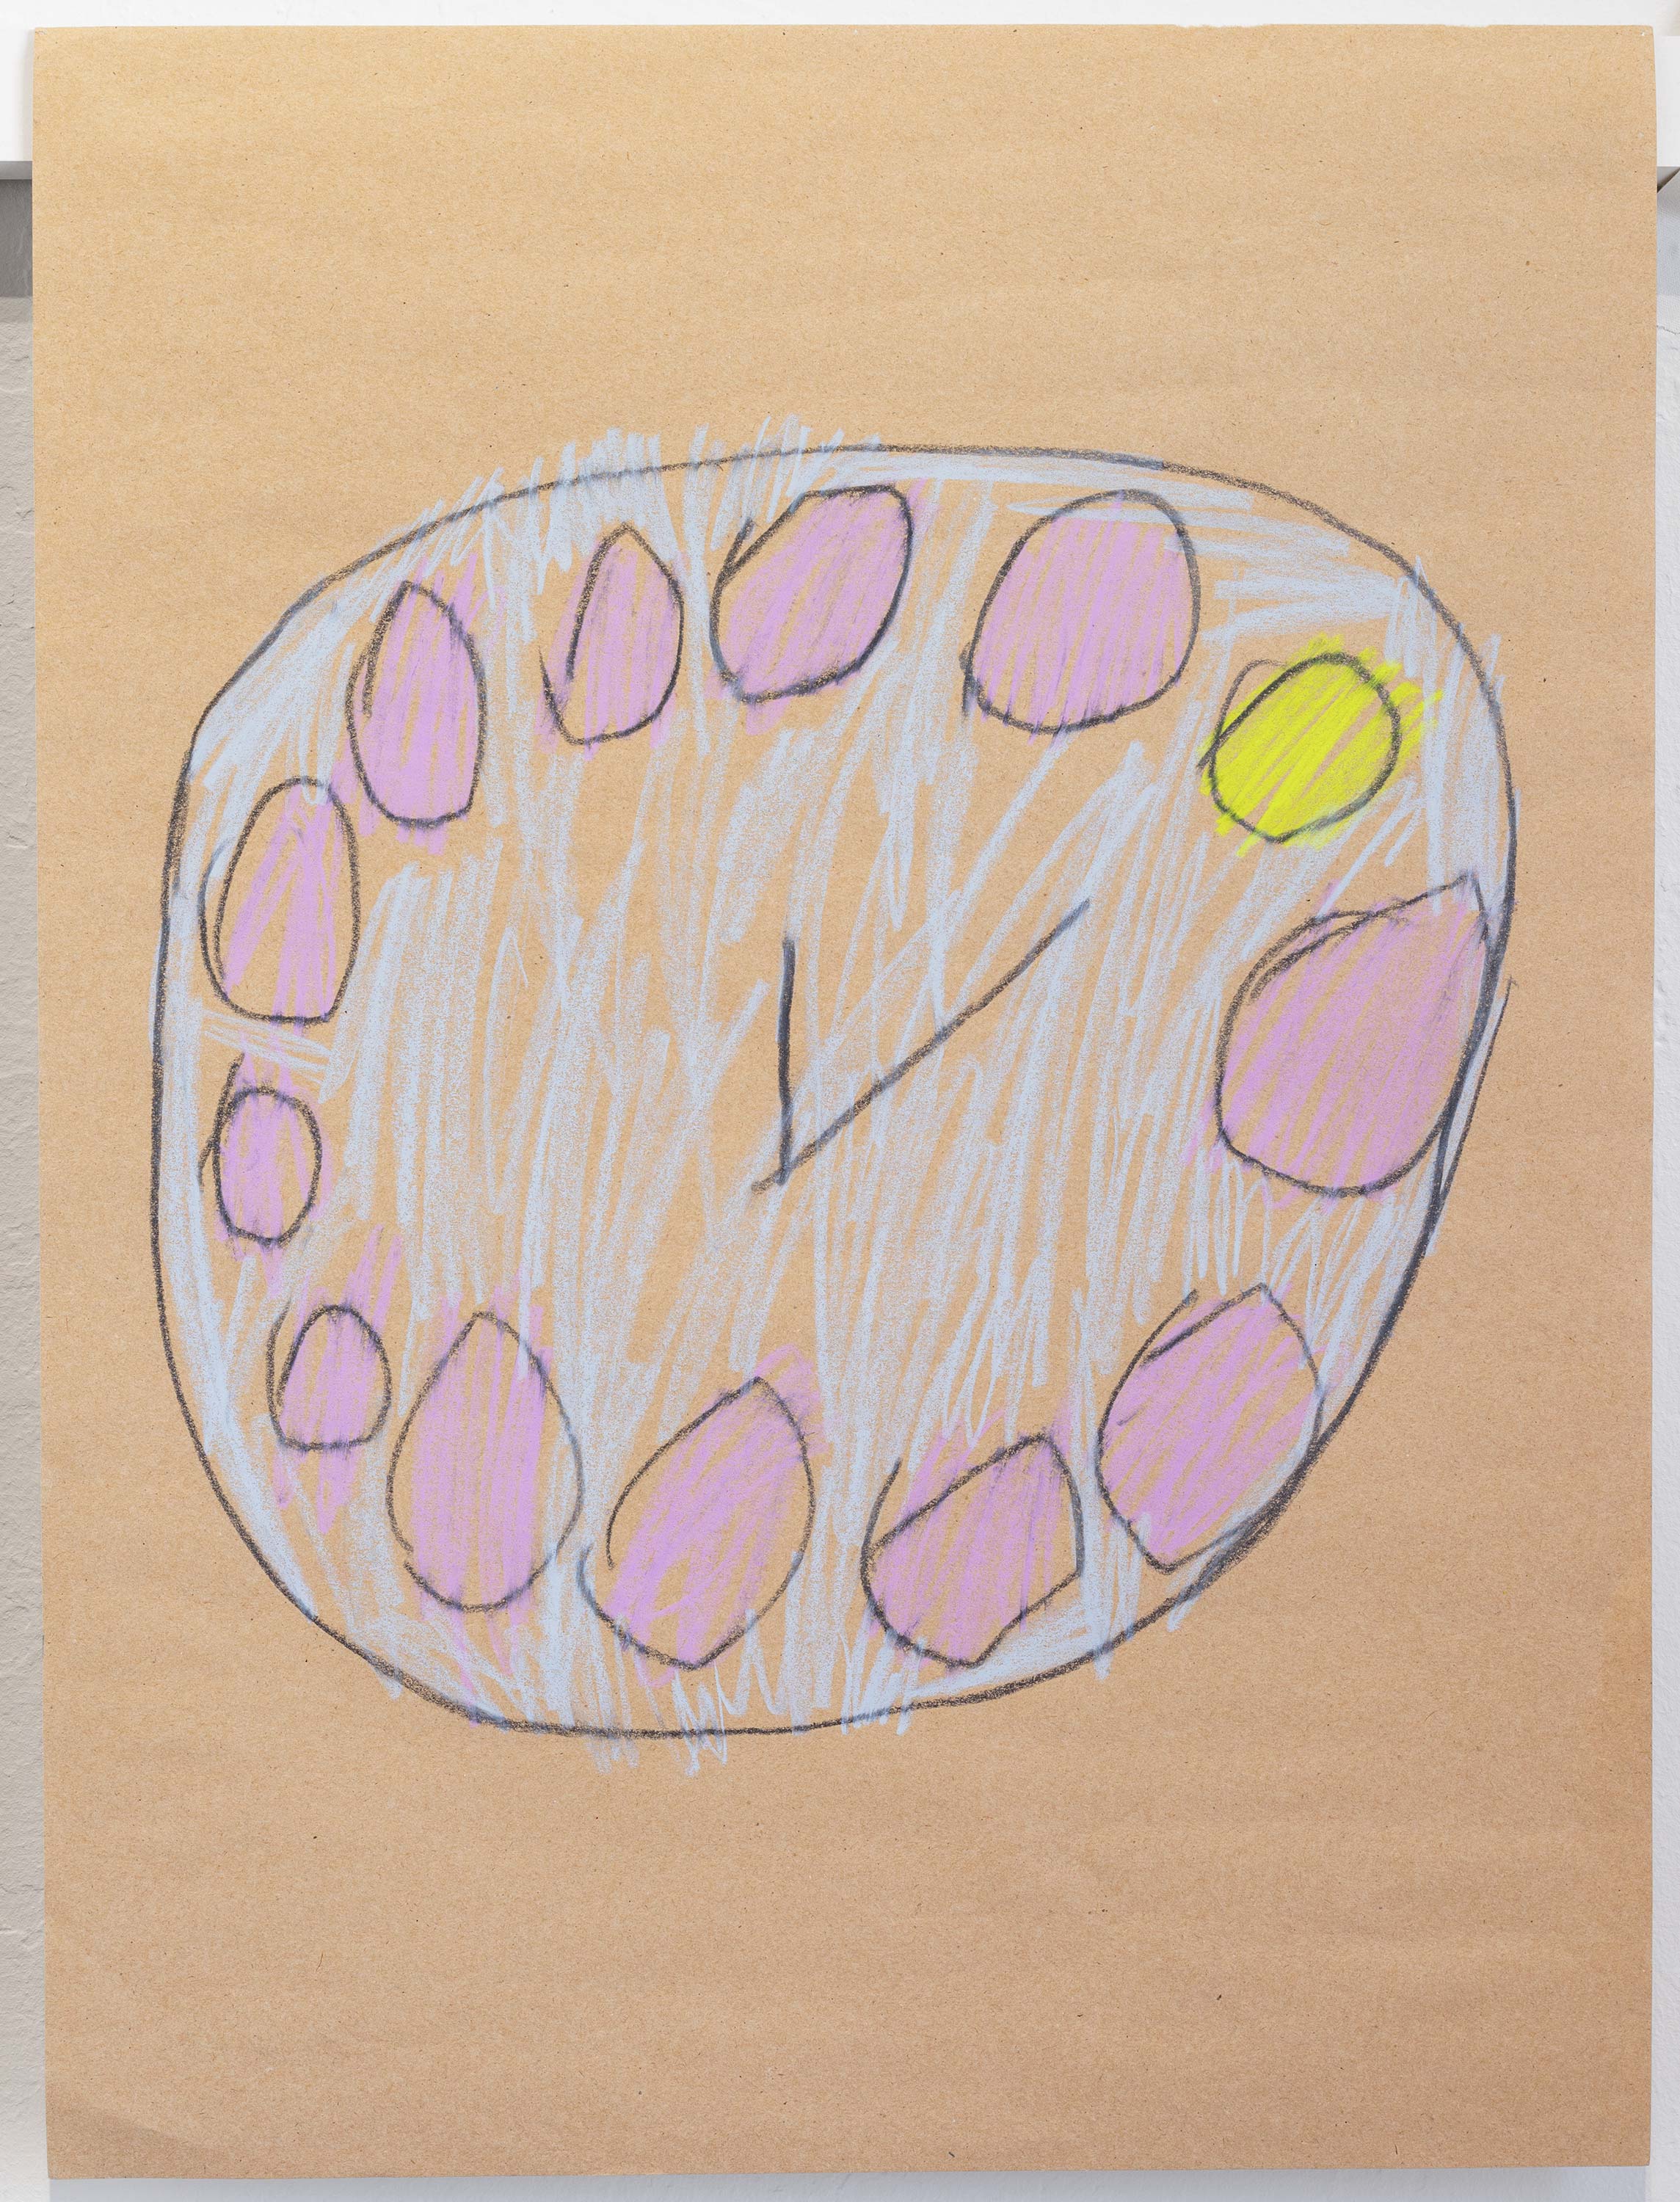 Al Freeman<br>Timer 16<br>2015<br>Graphite and oil pastel on paper<br>18 x 24 inches (46 x 61 cm)